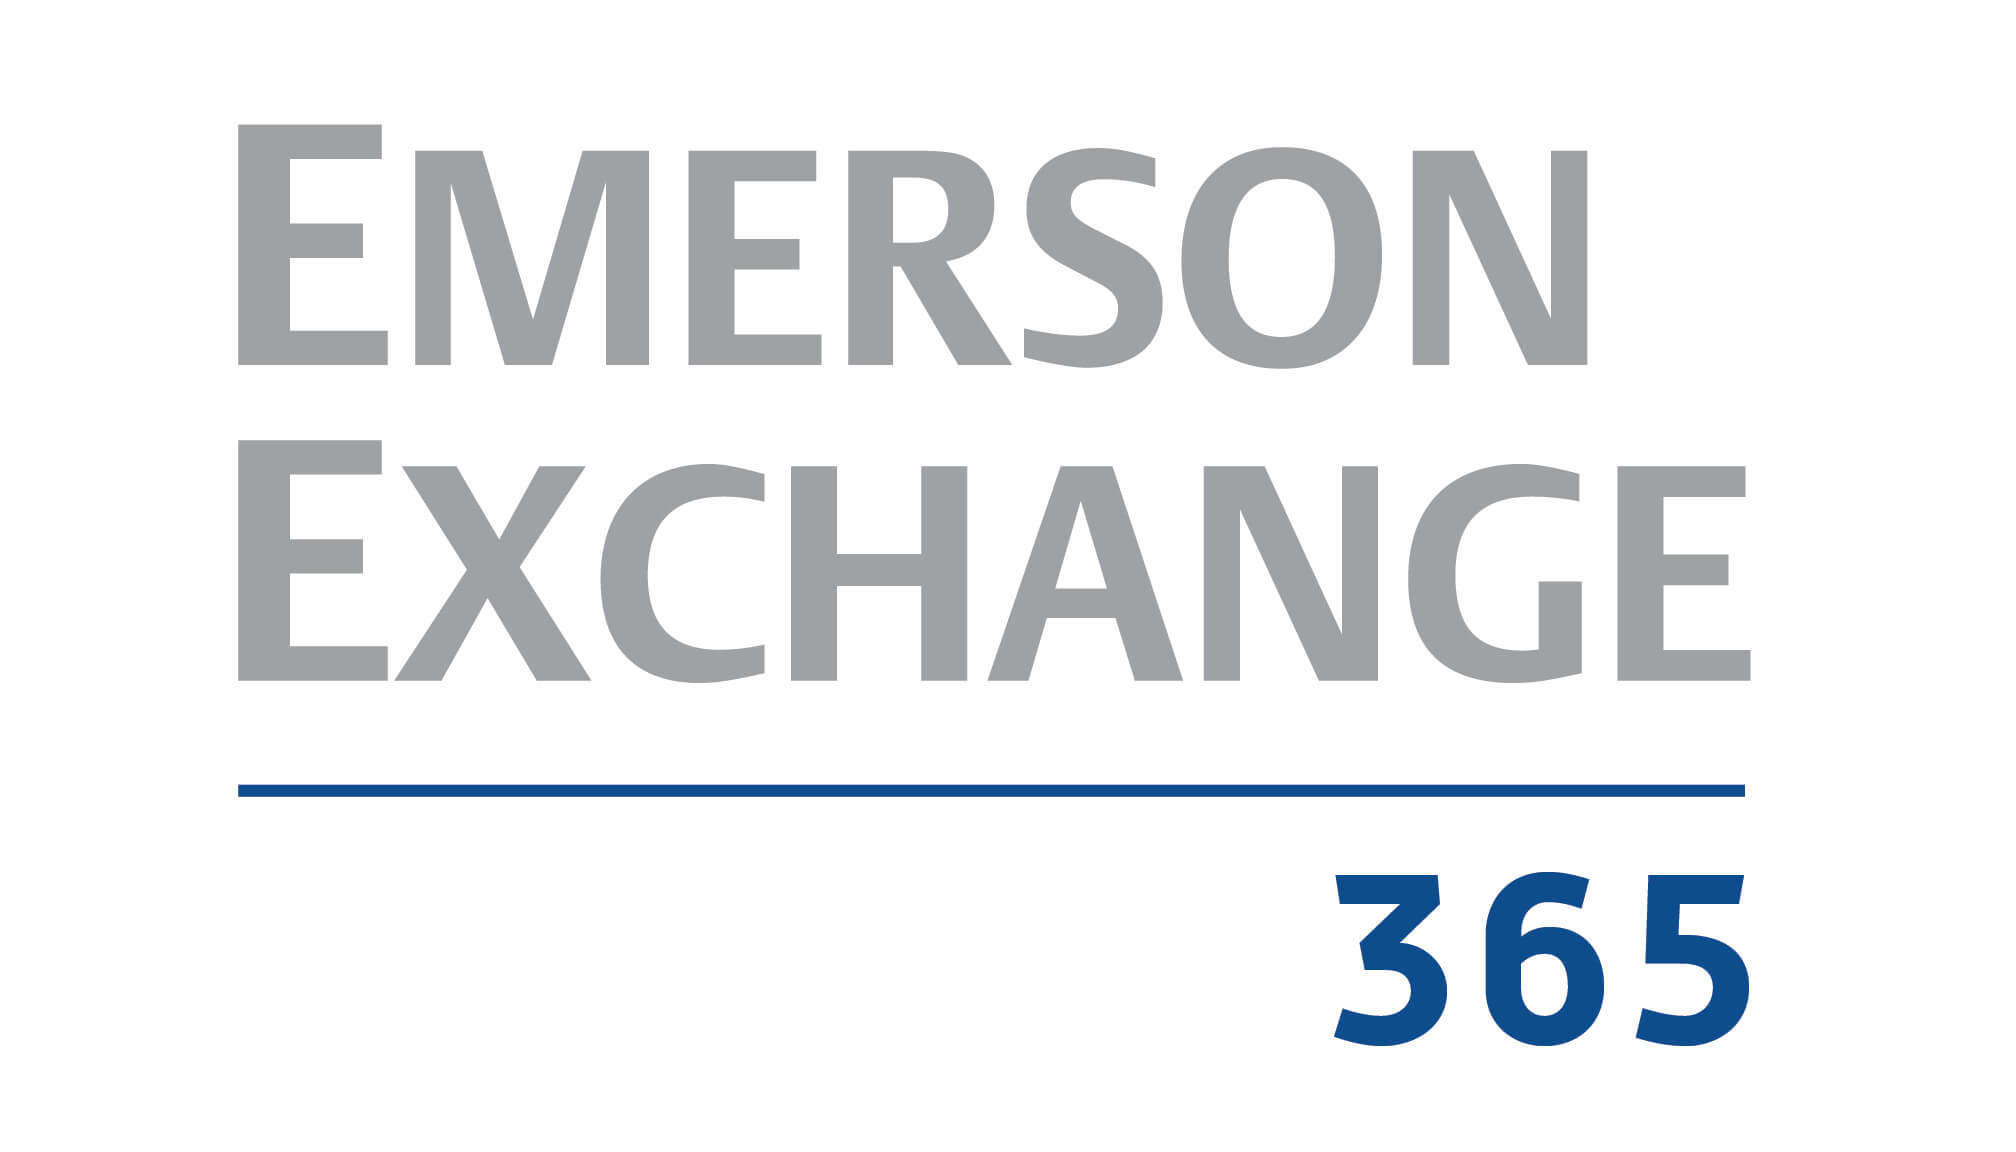 Emerson Exchange 365 logo